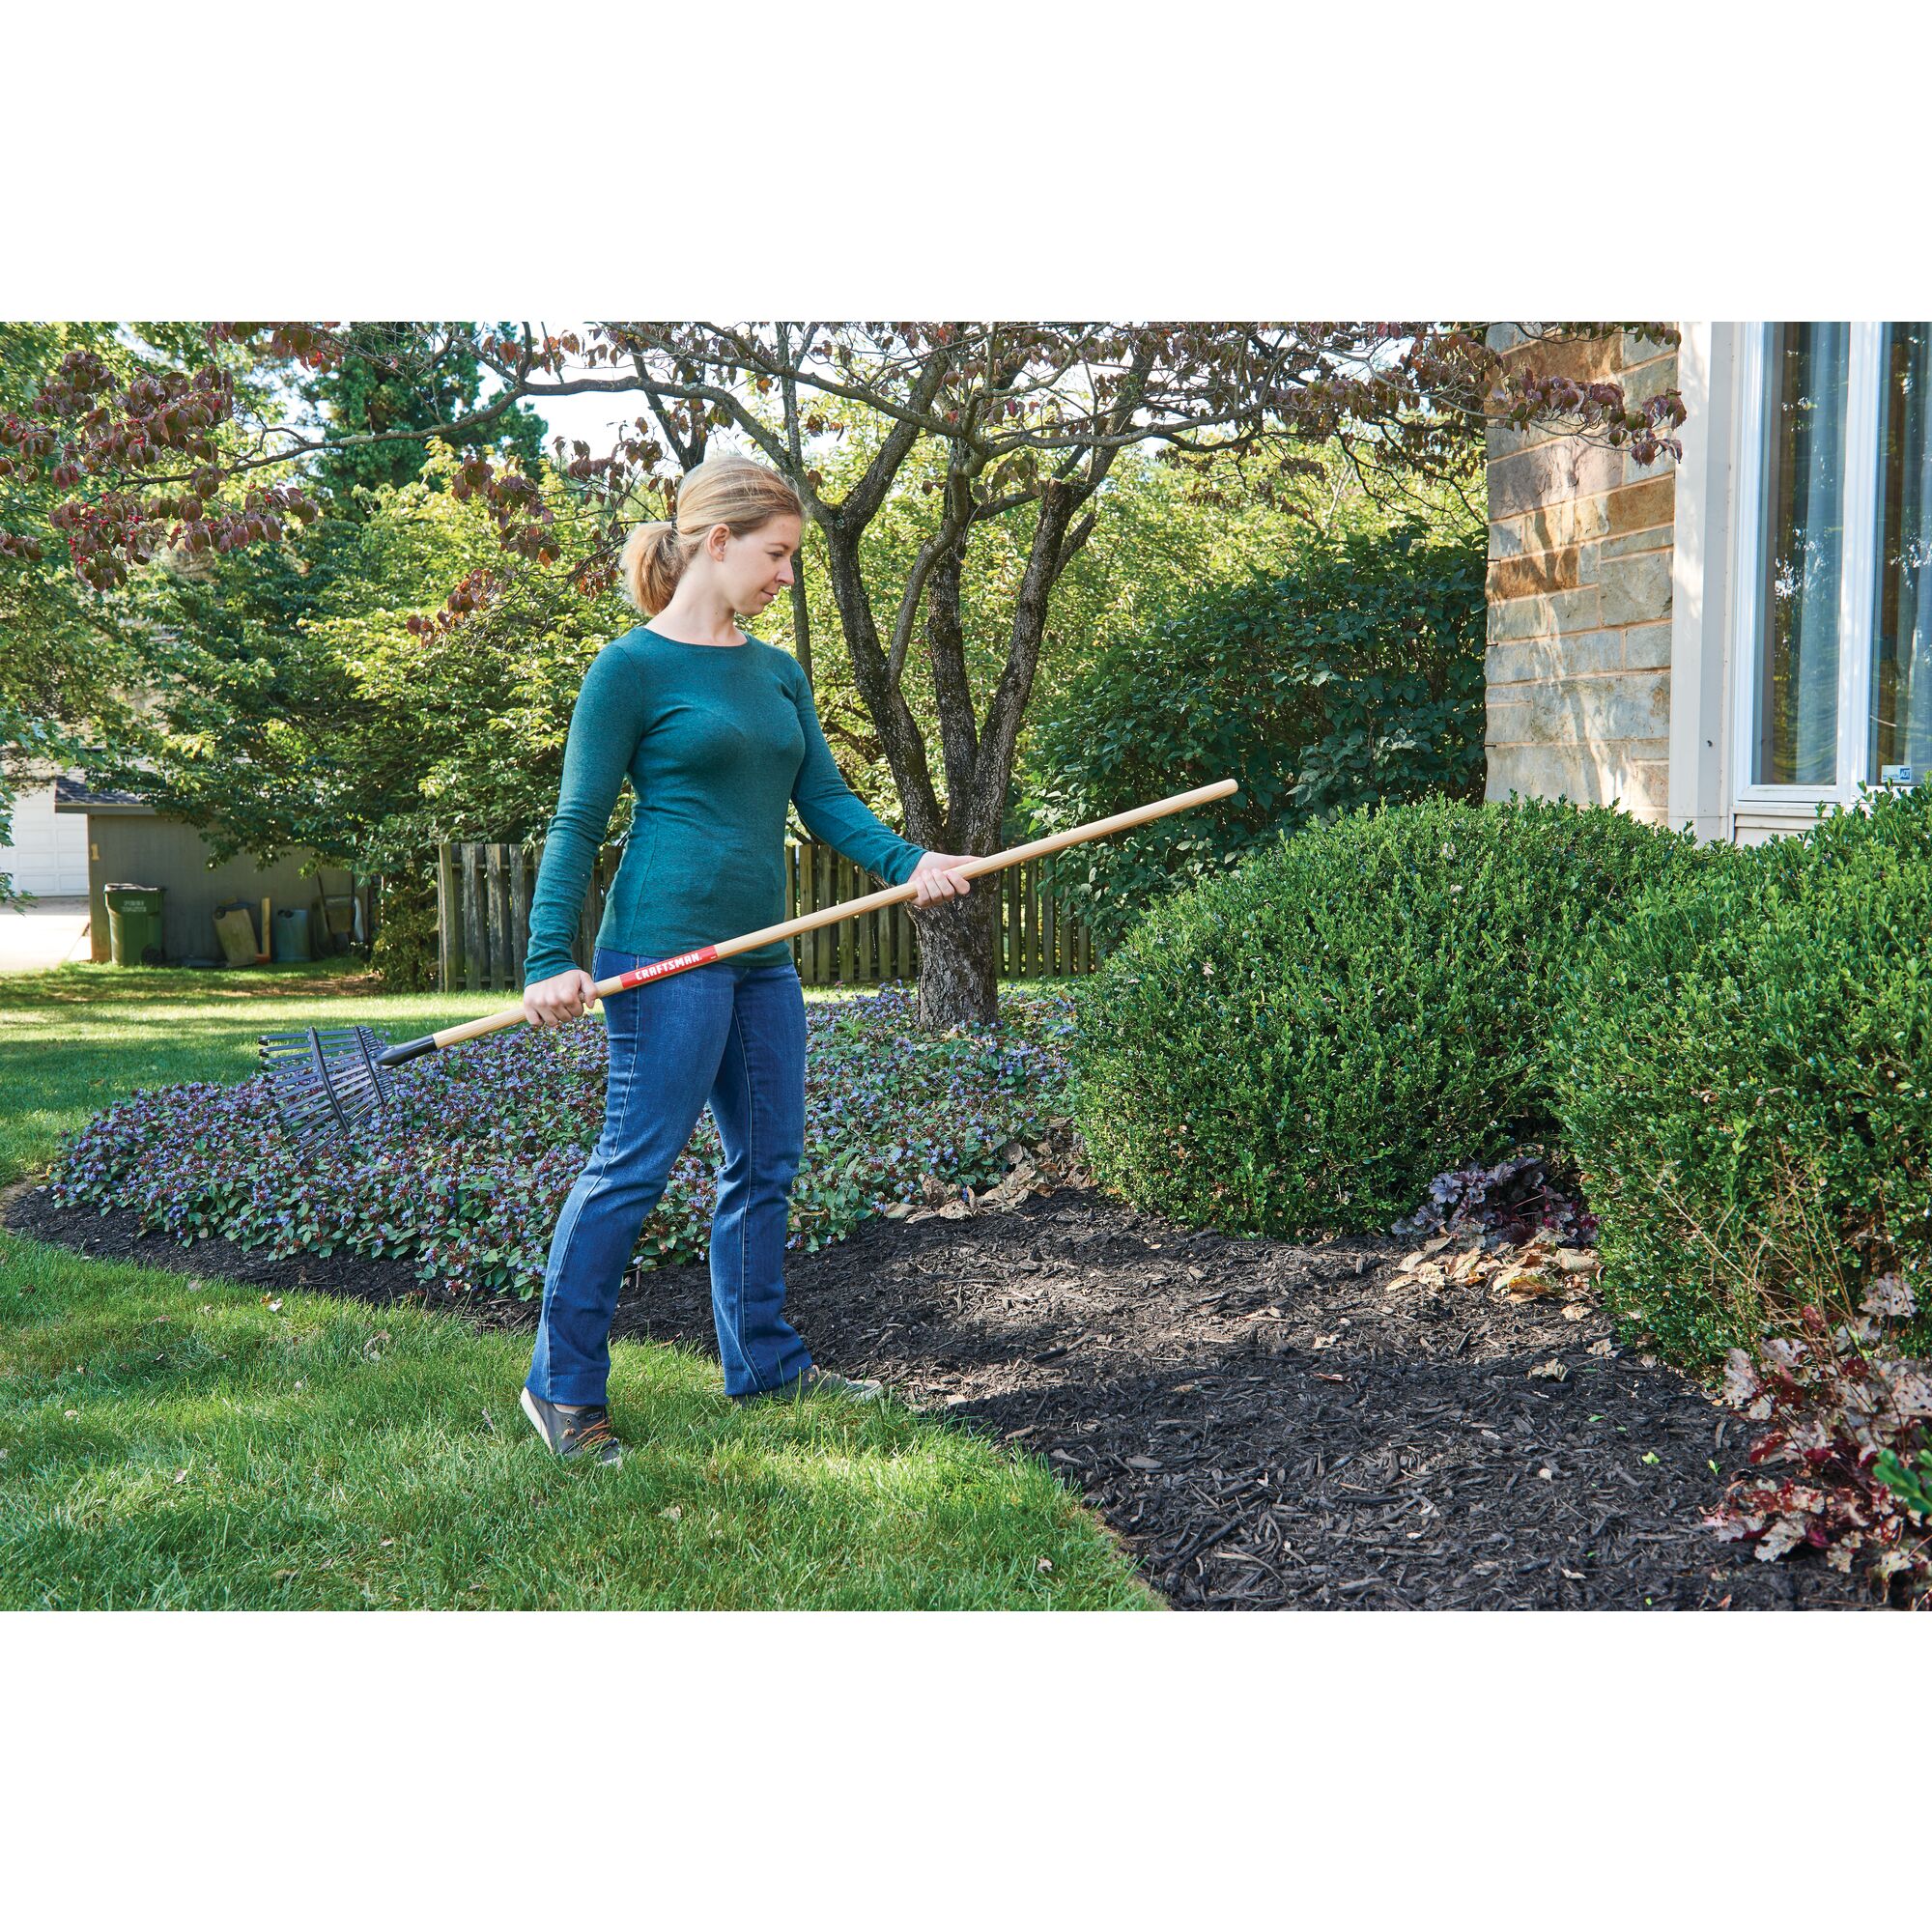 11 tine wood handle shrub rake is a great way to rake up fallen leaves.